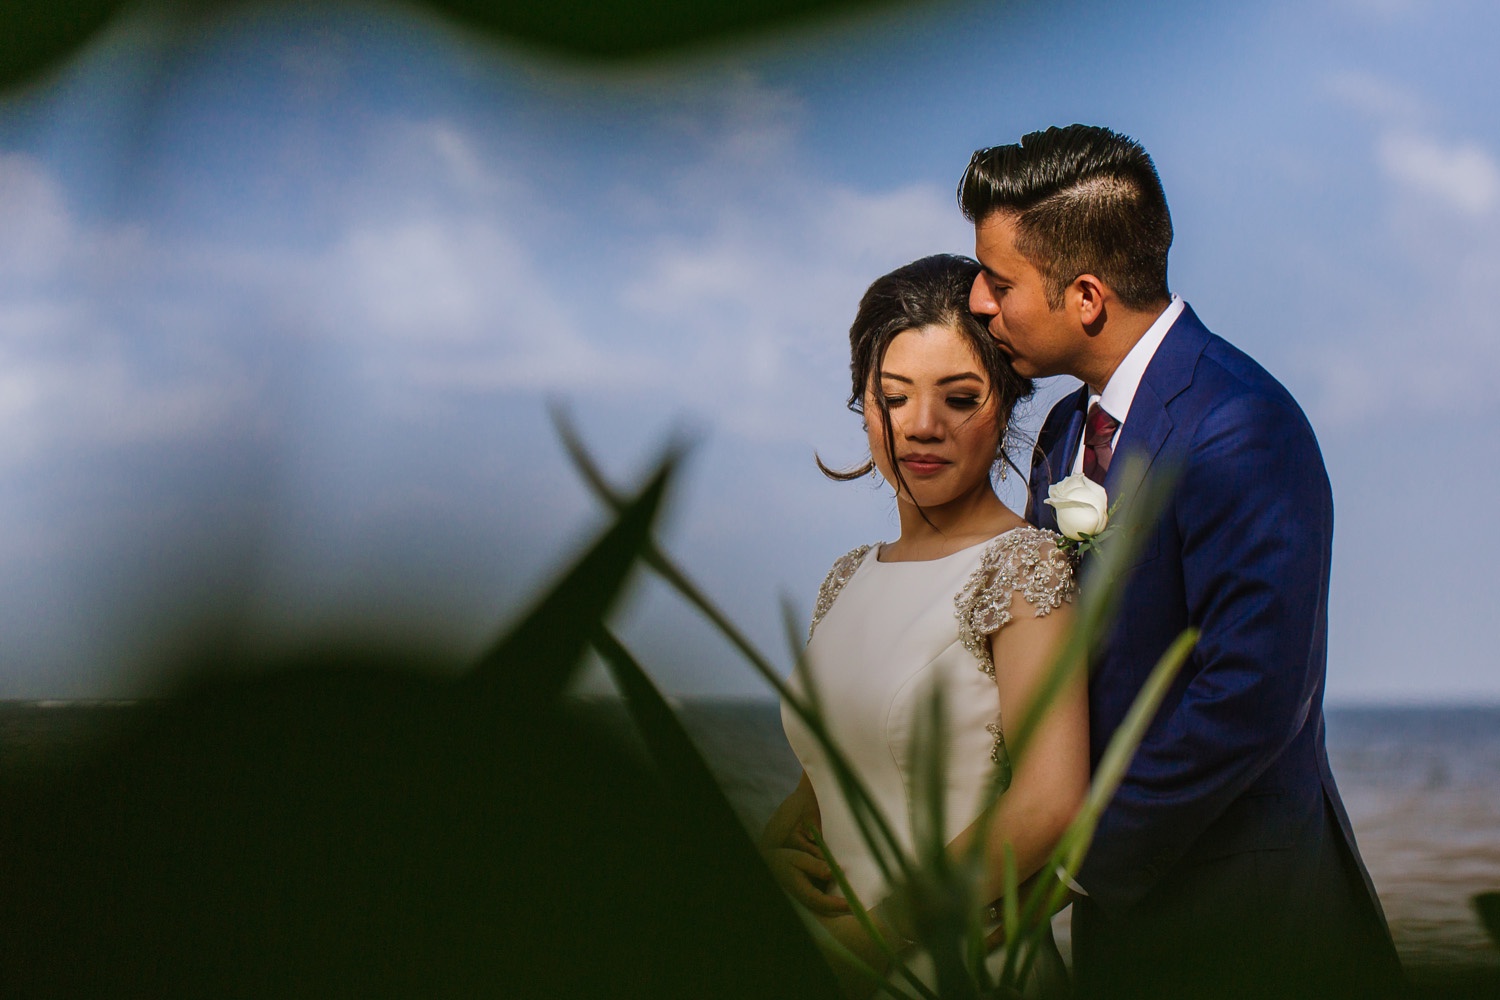 Royalton Cancun Wedding Photography